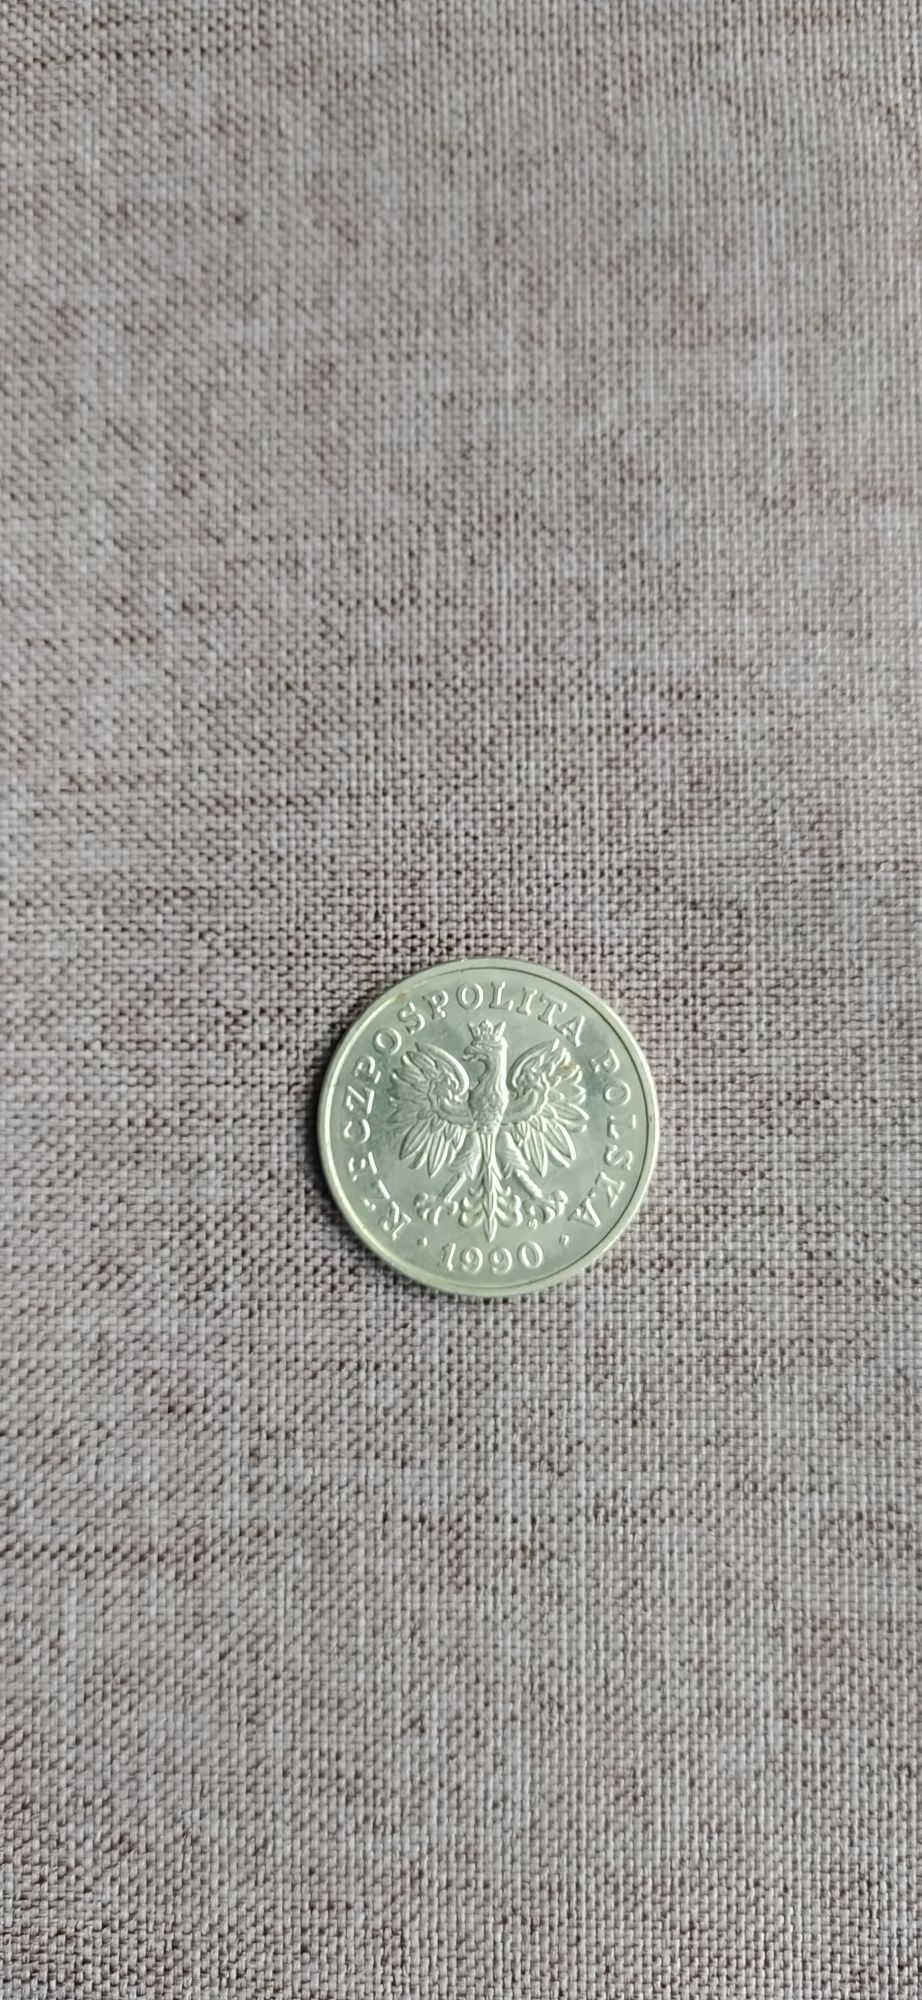 Moneta 50zł z 1990 roku